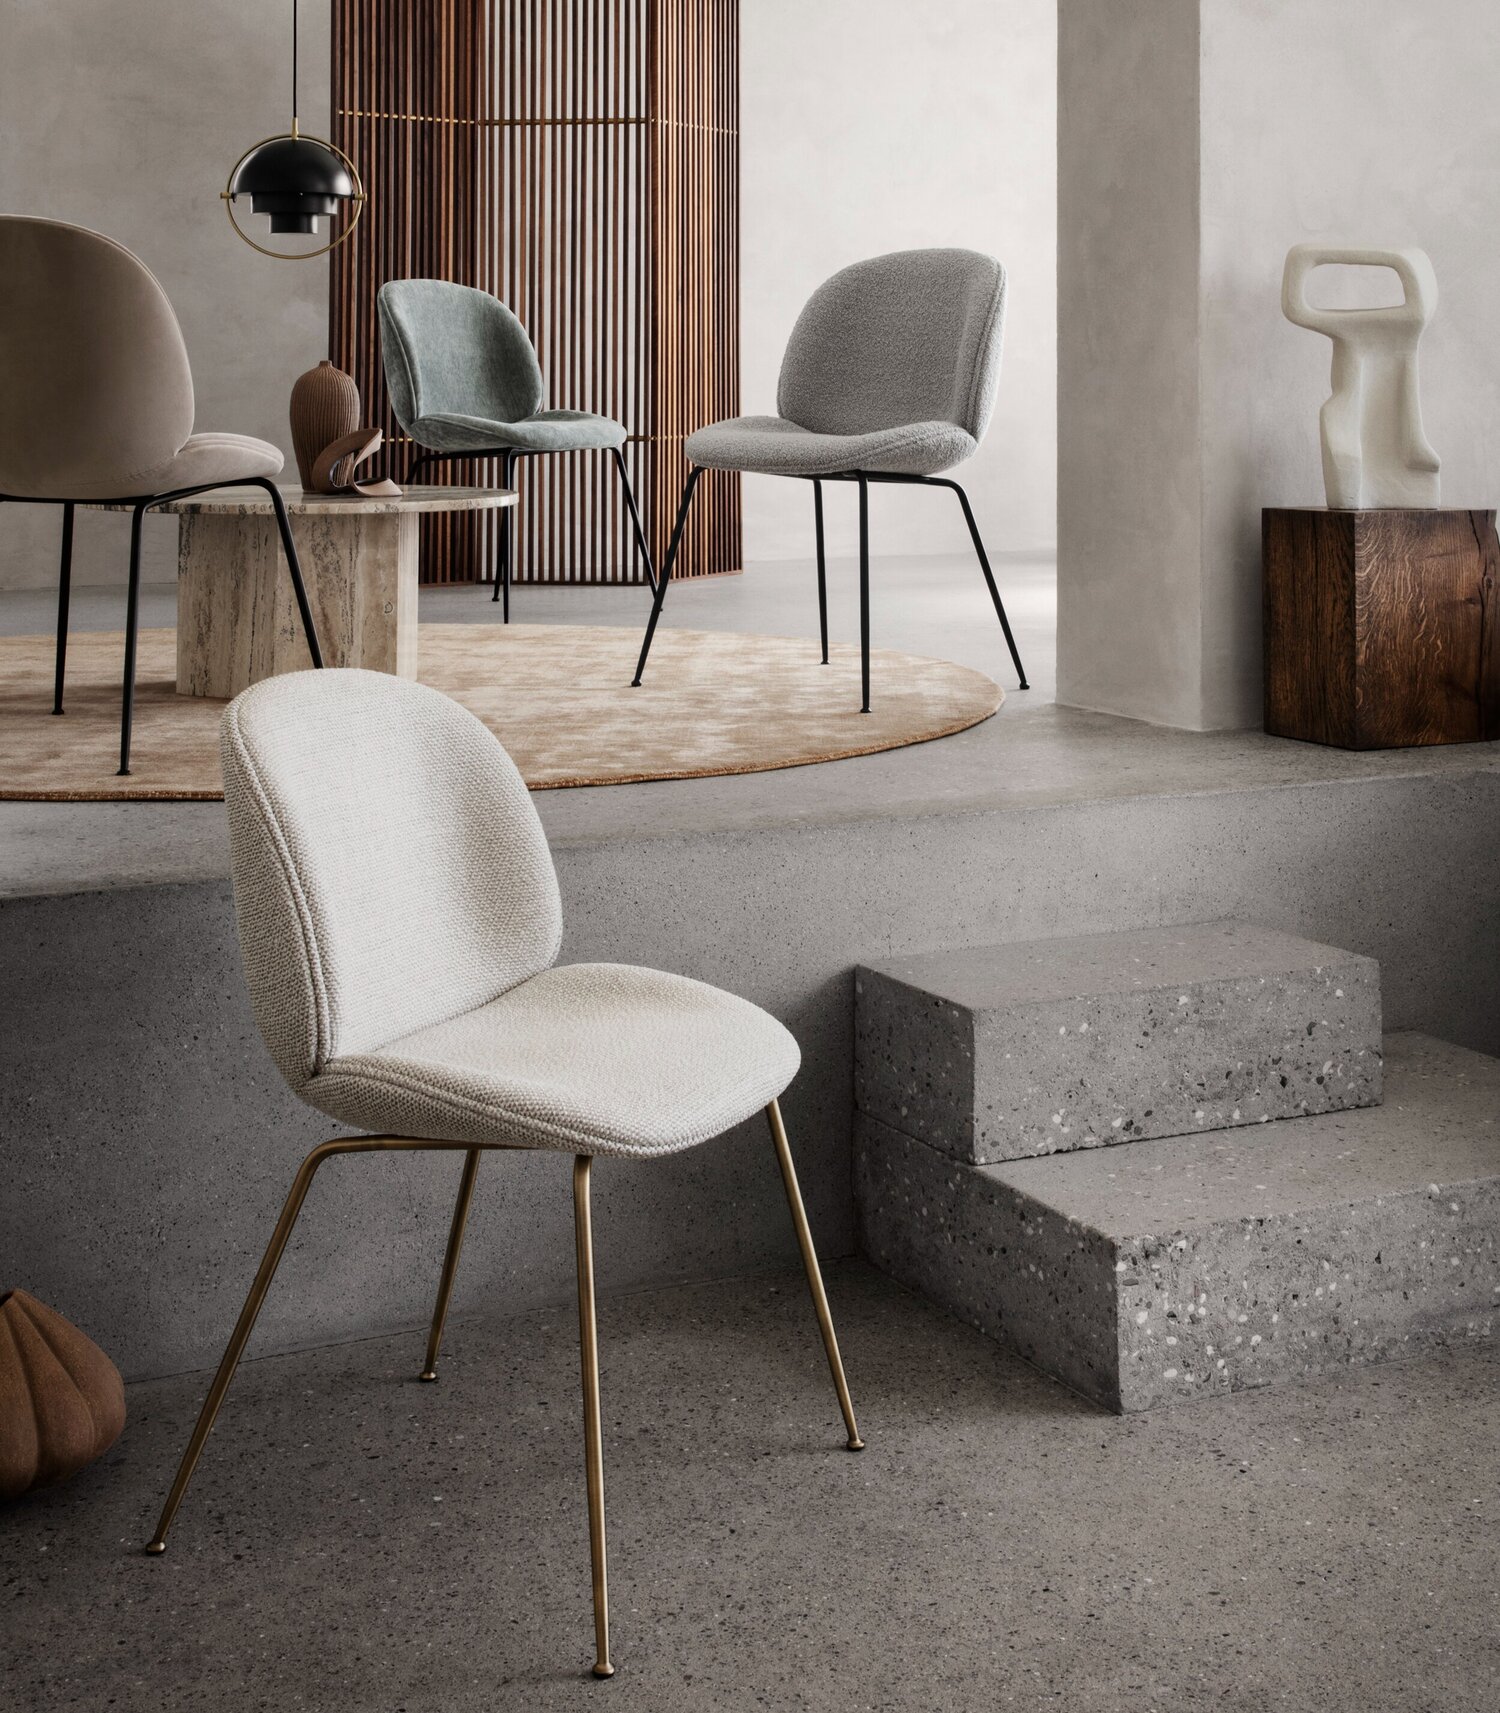 krom Min Trillen GamFratesi has developed four new upholstered editions of their iconic  Beetle Chair – Gubi - Scandinaviandesign.com